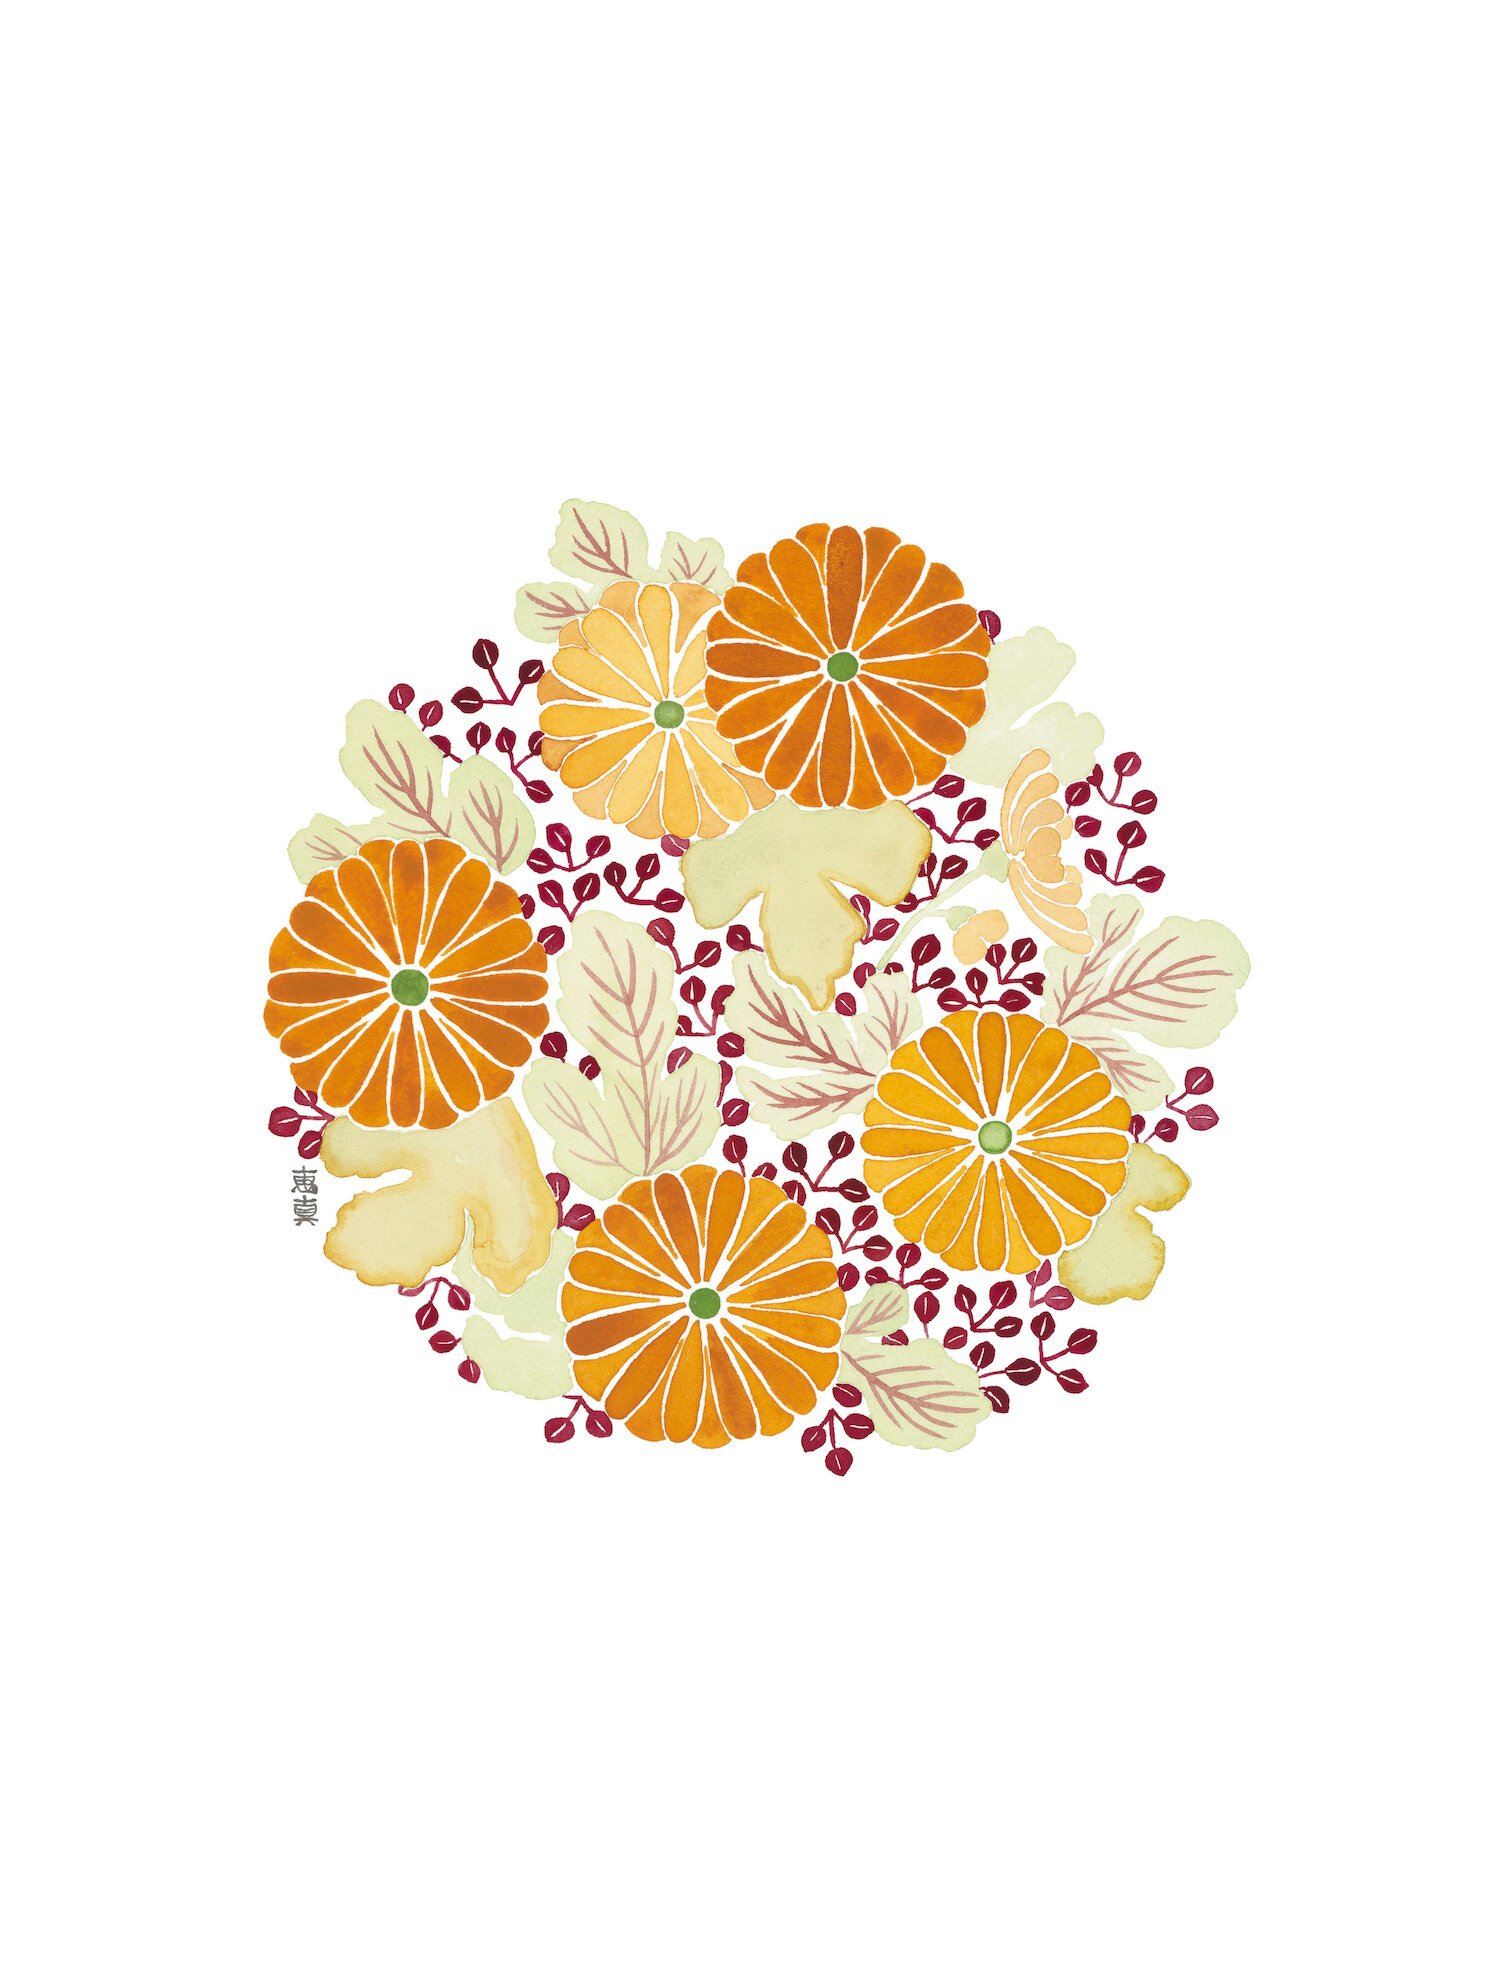 Chrysanthemum 16x12" watercolor on paper